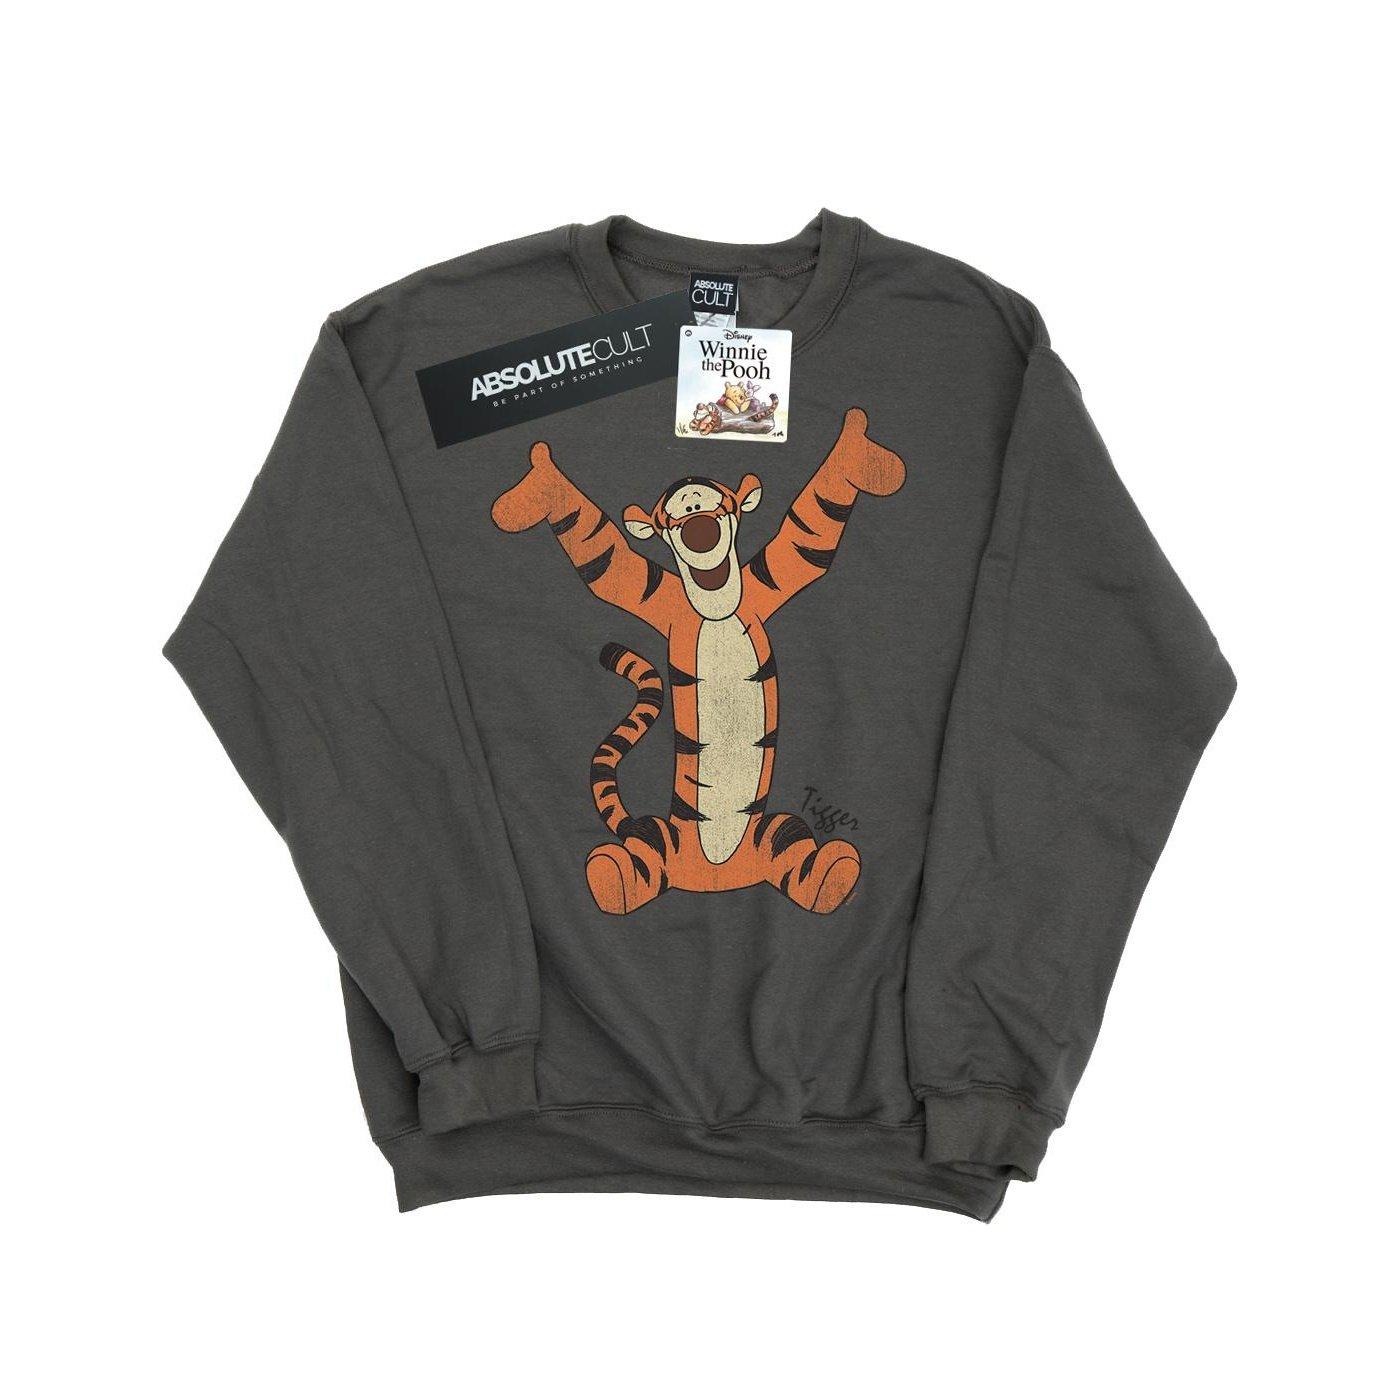 Classic Sweatshirt Damen Taubengrau XL von Winnie the Pooh